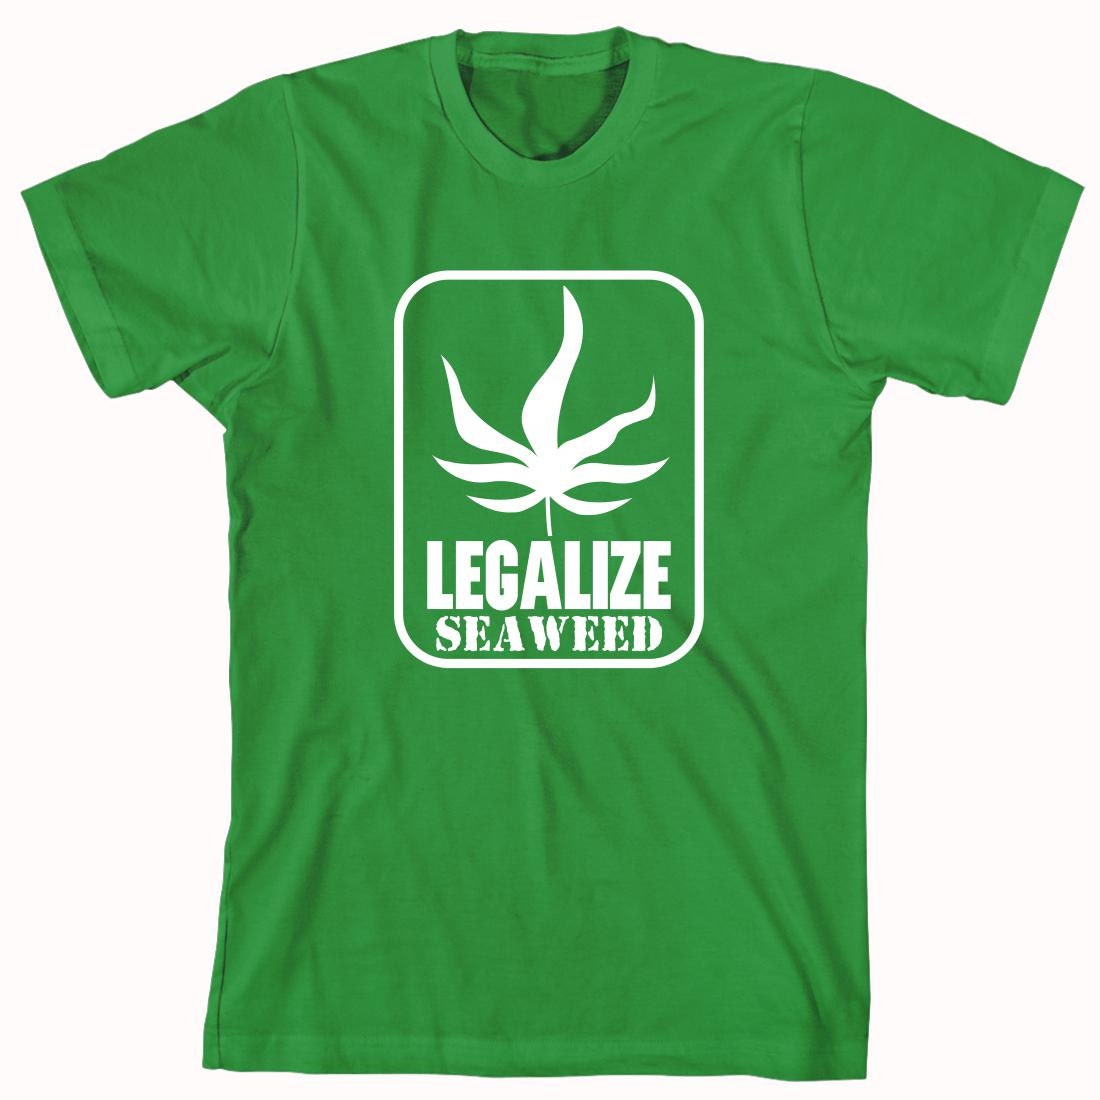 Legalize Seaweed shirt plants marine biologist ID: 208